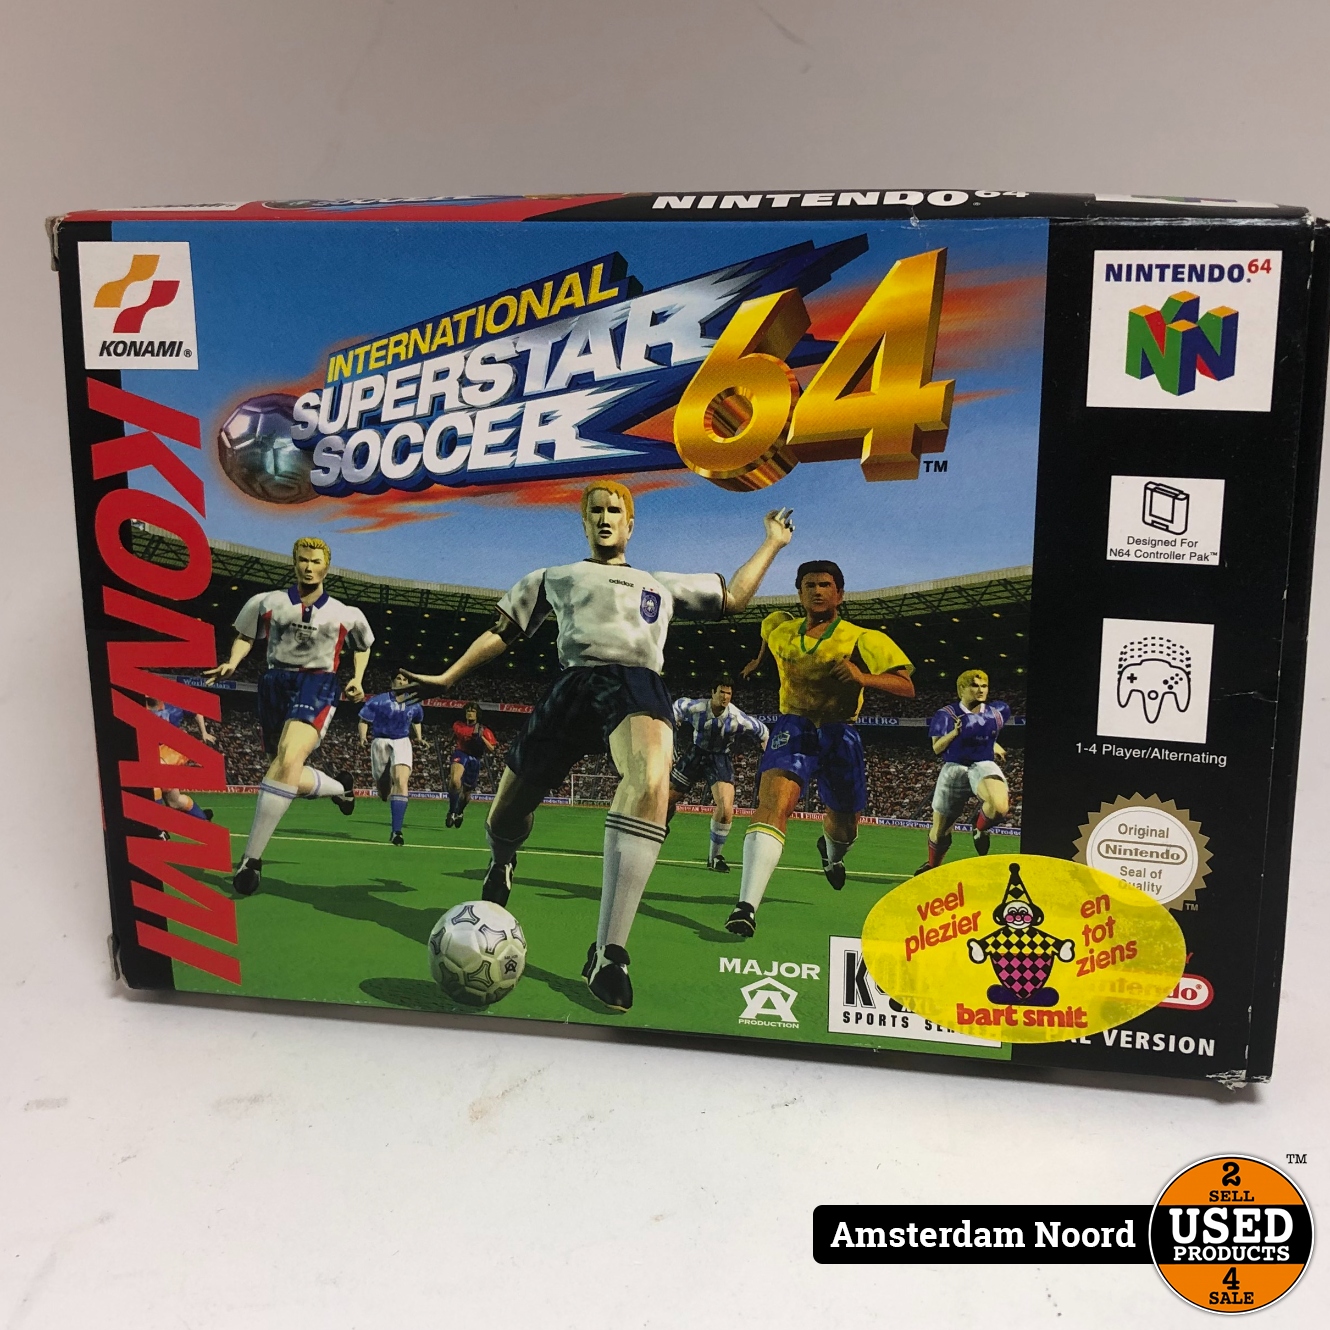 Nintendo N64 International Superstar Soccer 64 Used Products Amsterdam Noord